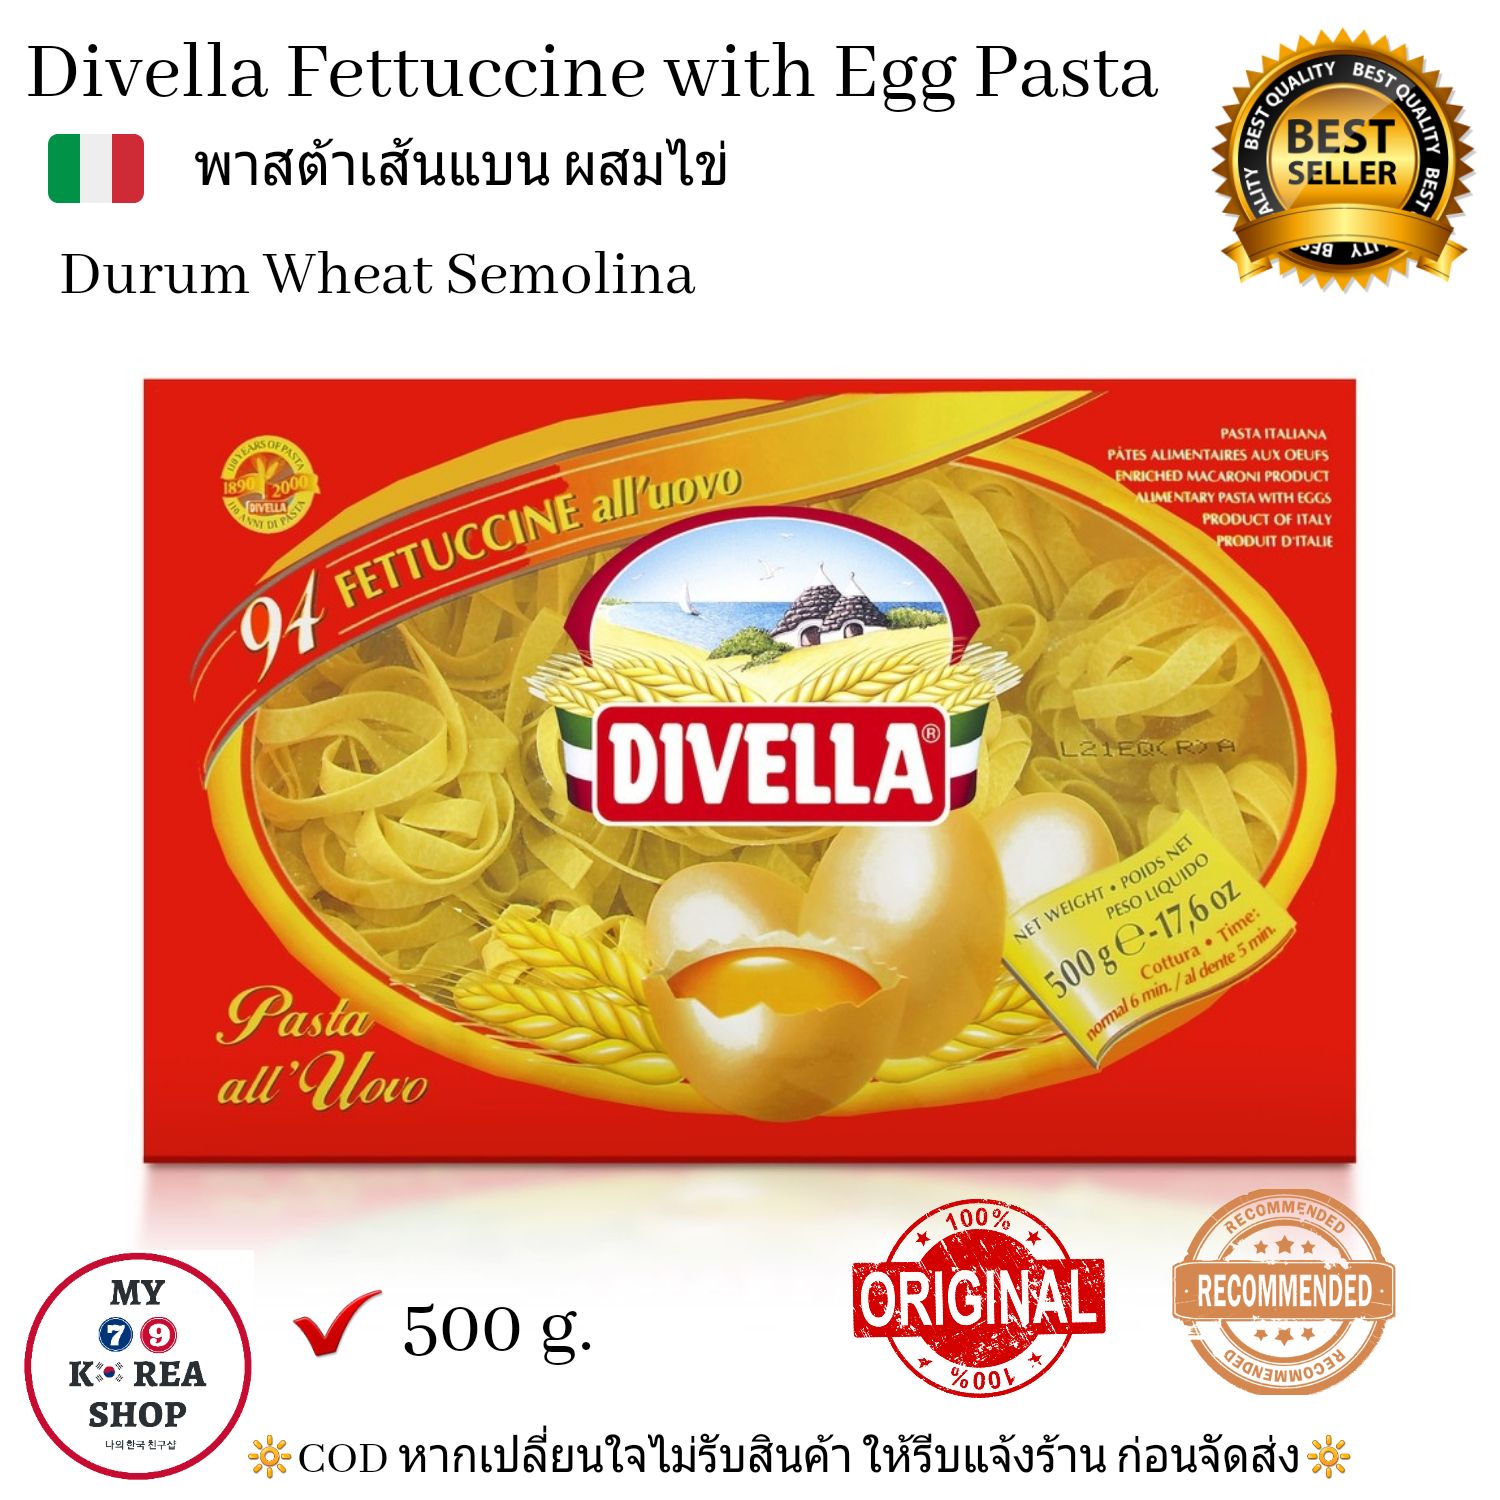 Fettuccini With Egg Pasta ( Divella ) 500g. พาสต้าเส้นแบน ผสมไข่ ดิเวลล่า